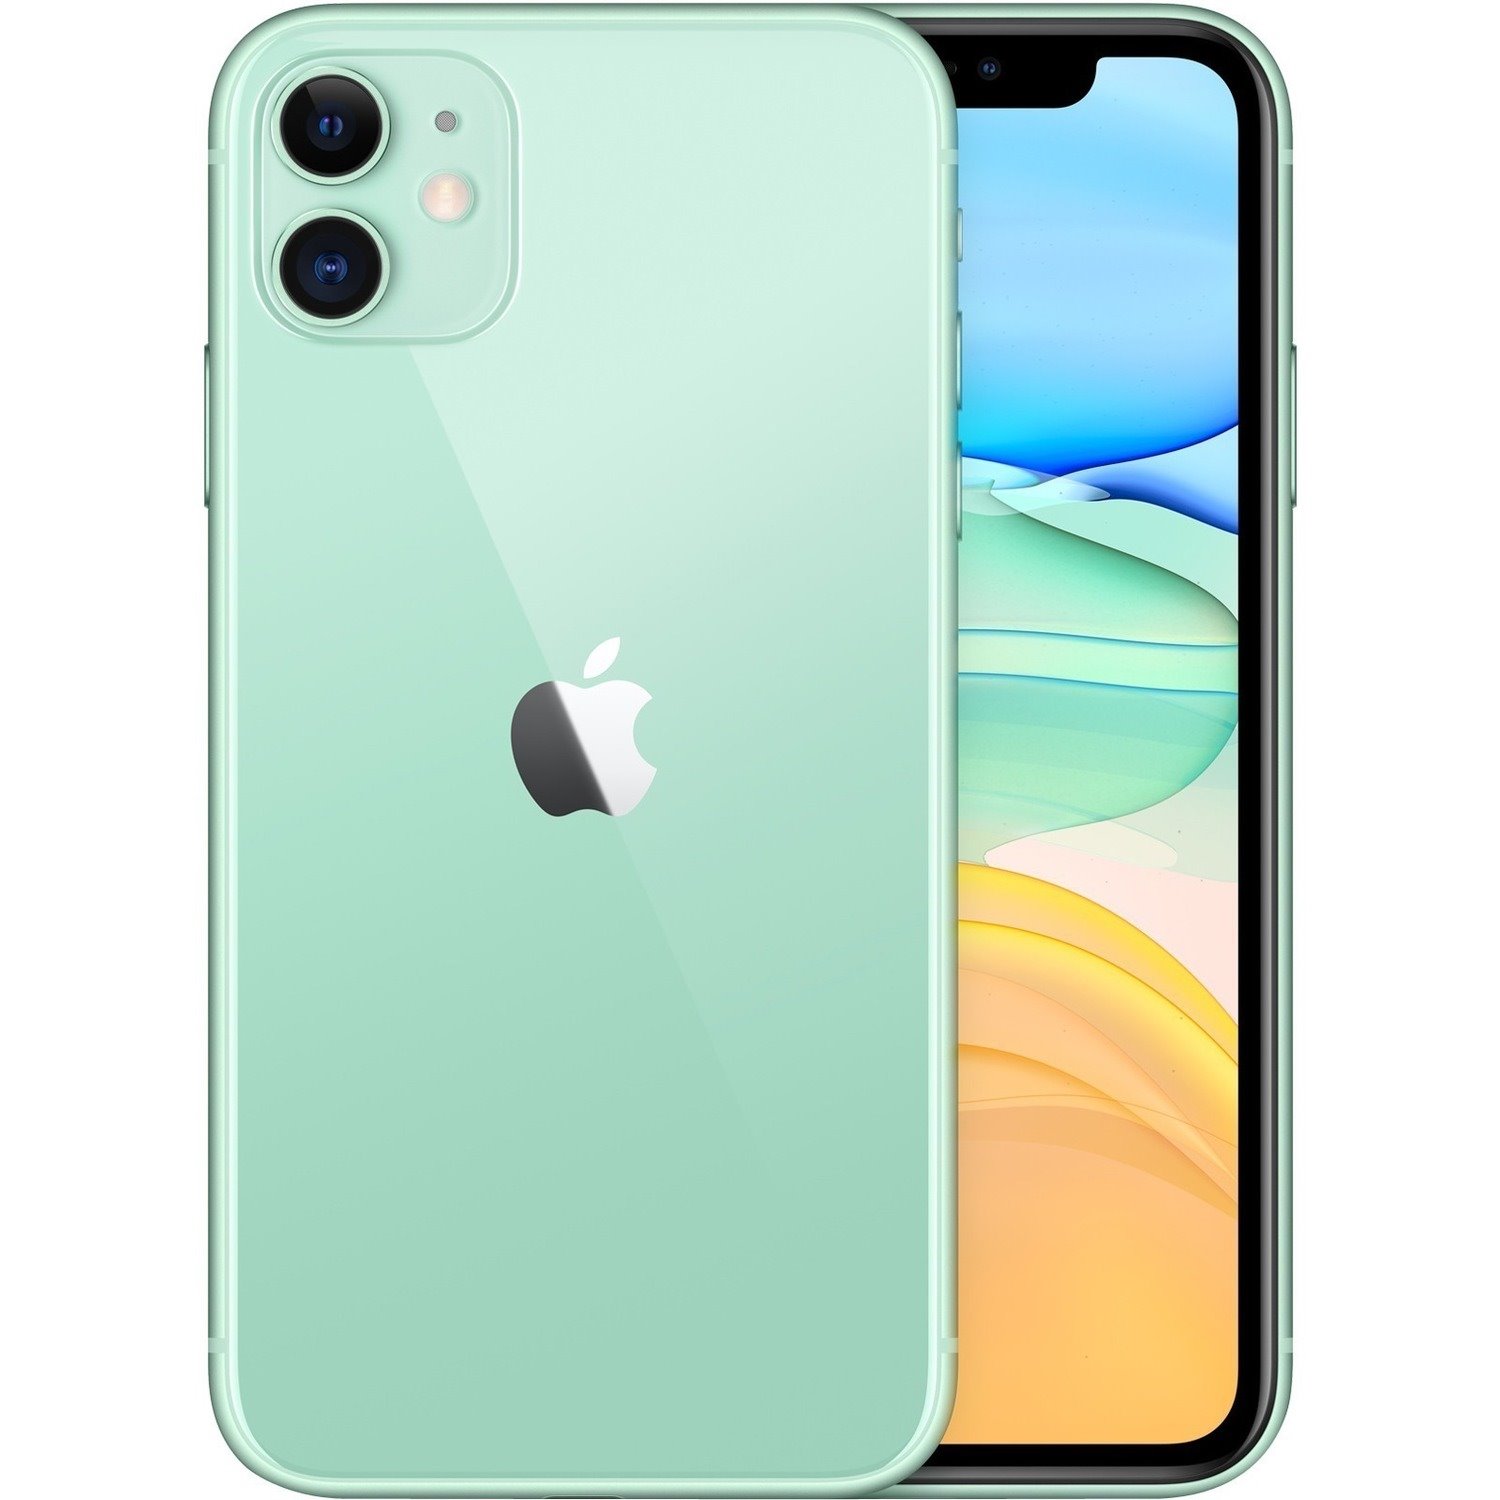 Apple iPhone 11 128 GB Smartphone - 15.5 cm (6.1") LCD 1792 x 828 - Dual-core (2 Core) 2.65 GHz Quad-core (4 Core) 1.80 GHz - 4 GB RAM - iOS 14 - 4G - Green